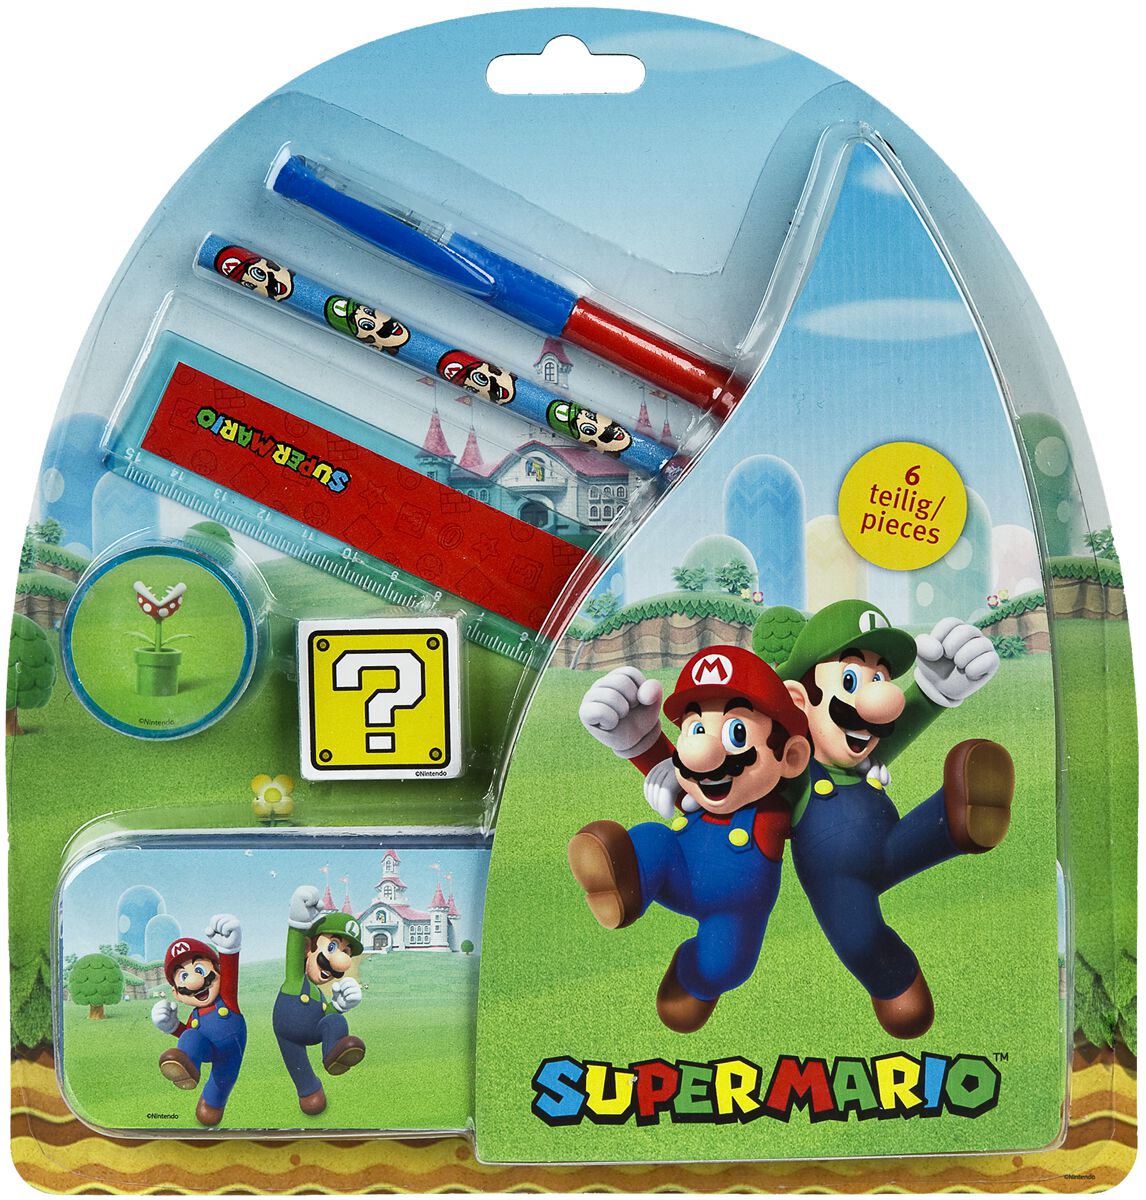 Cancelleria Gaming di Super Mario - Stationery Set - Unisex - multicolore